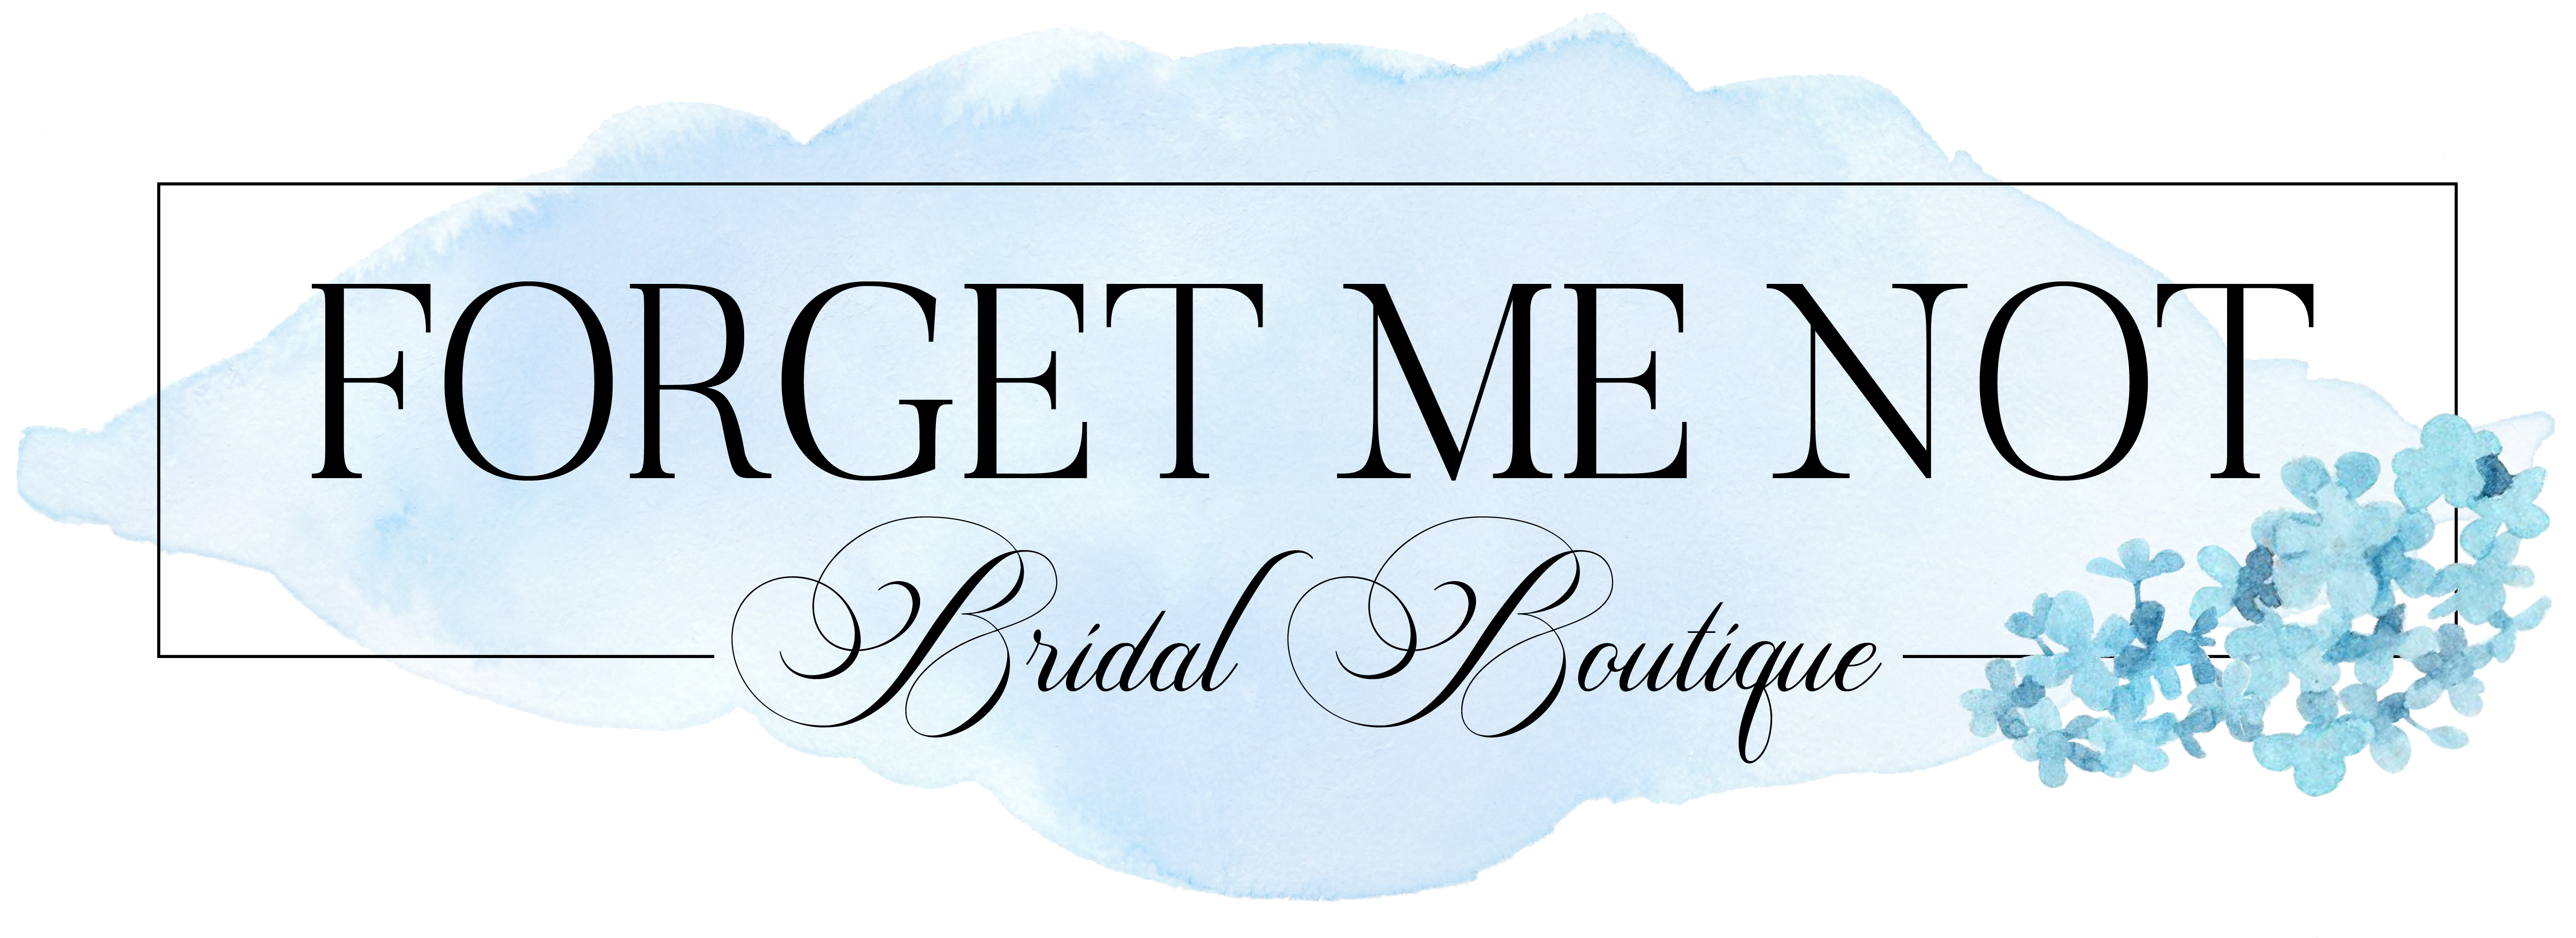 Forget Me Not Bridal Boutique Logo